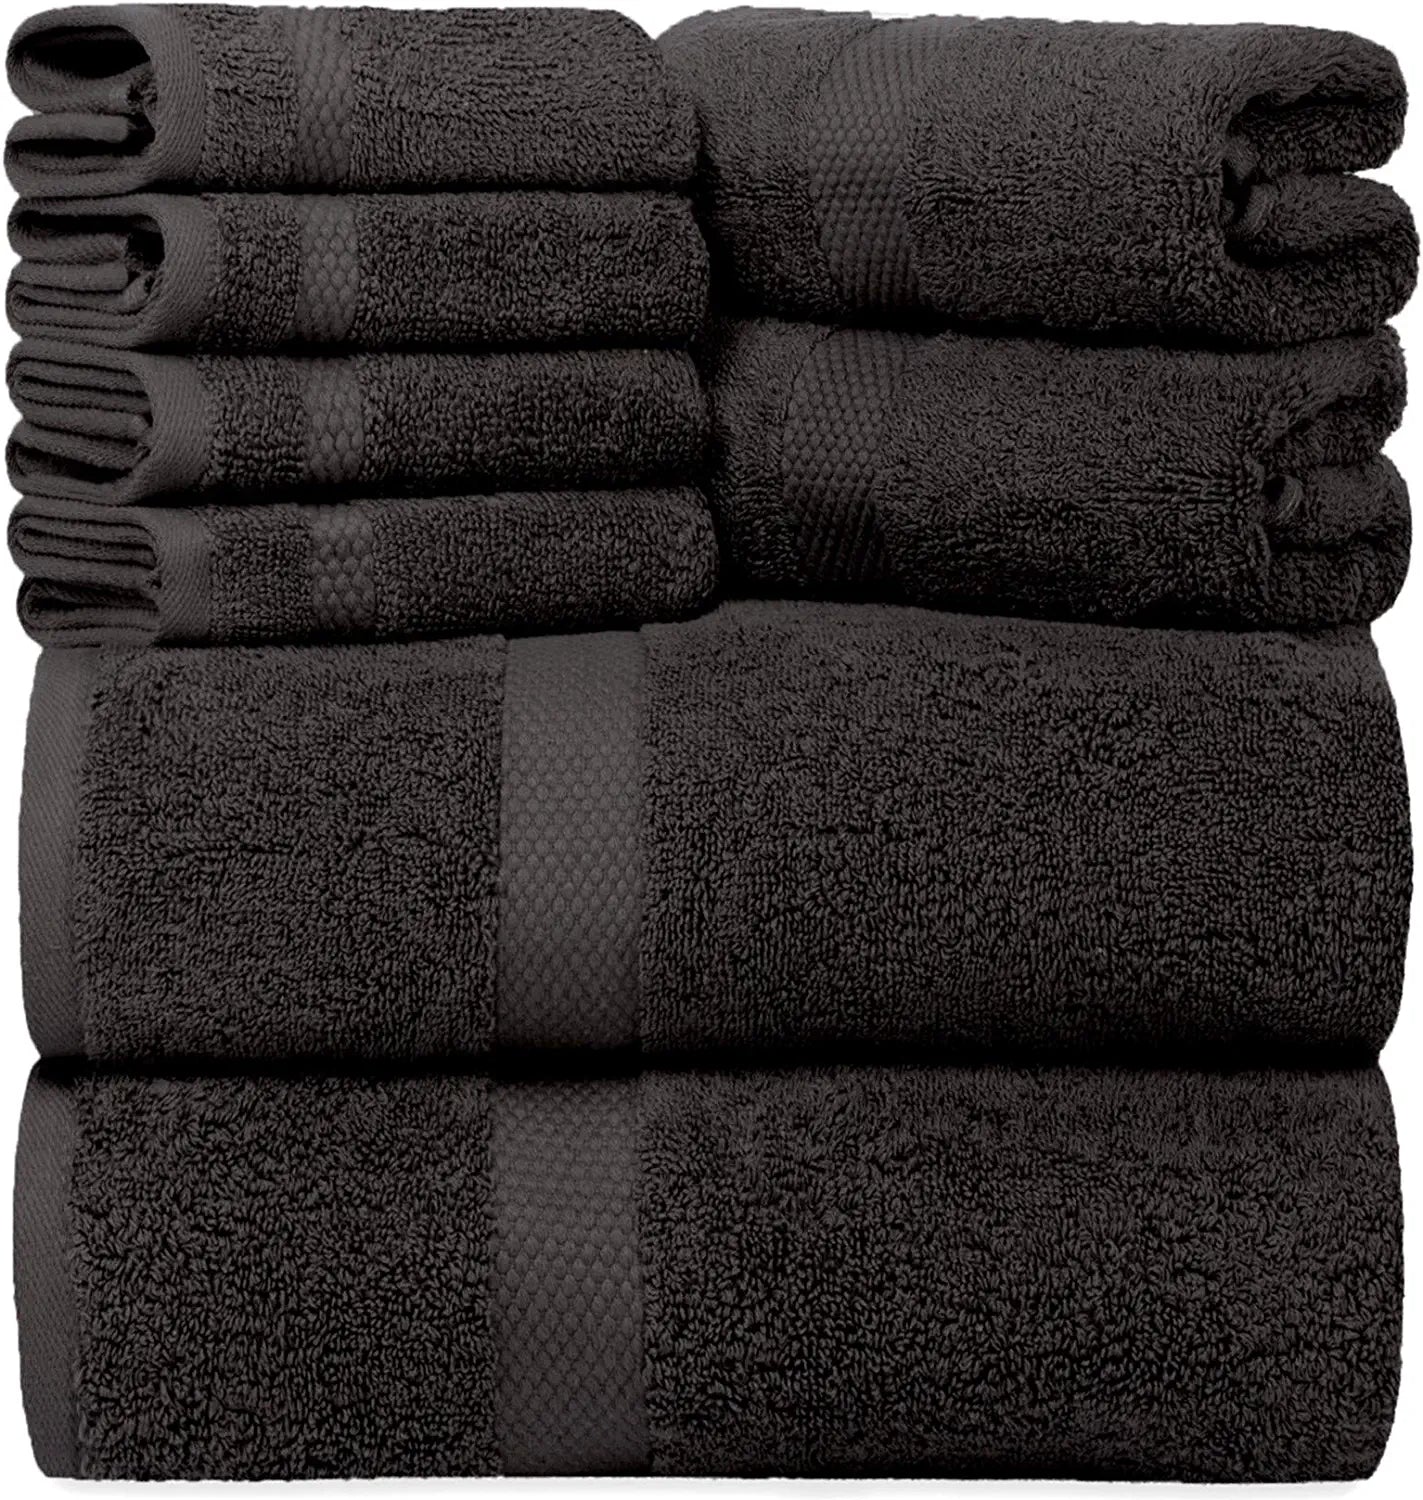 8Pc Black Towel Set